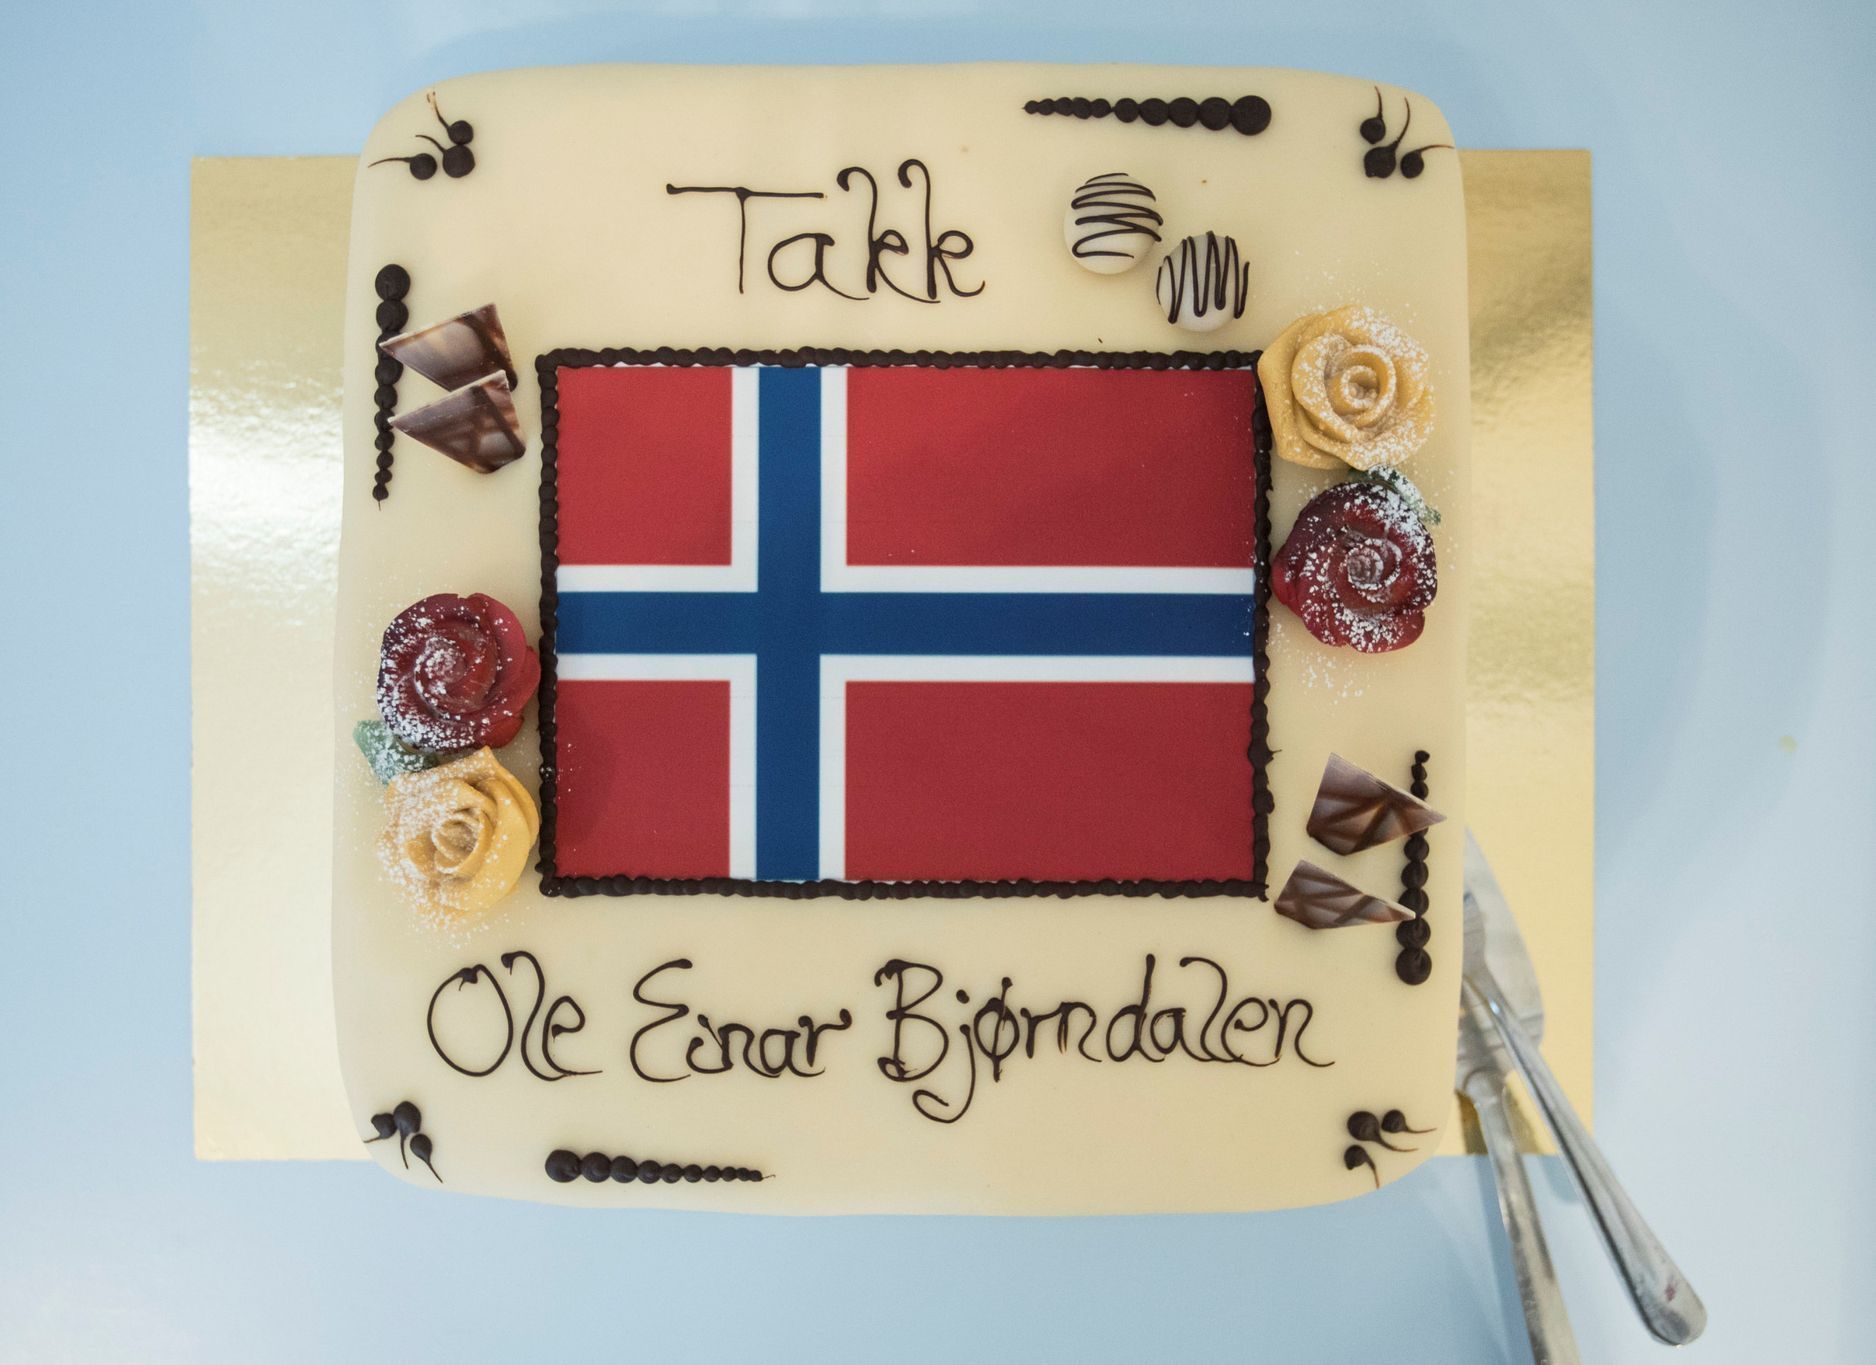 Ole Einar Björndalen ukončil kariéru